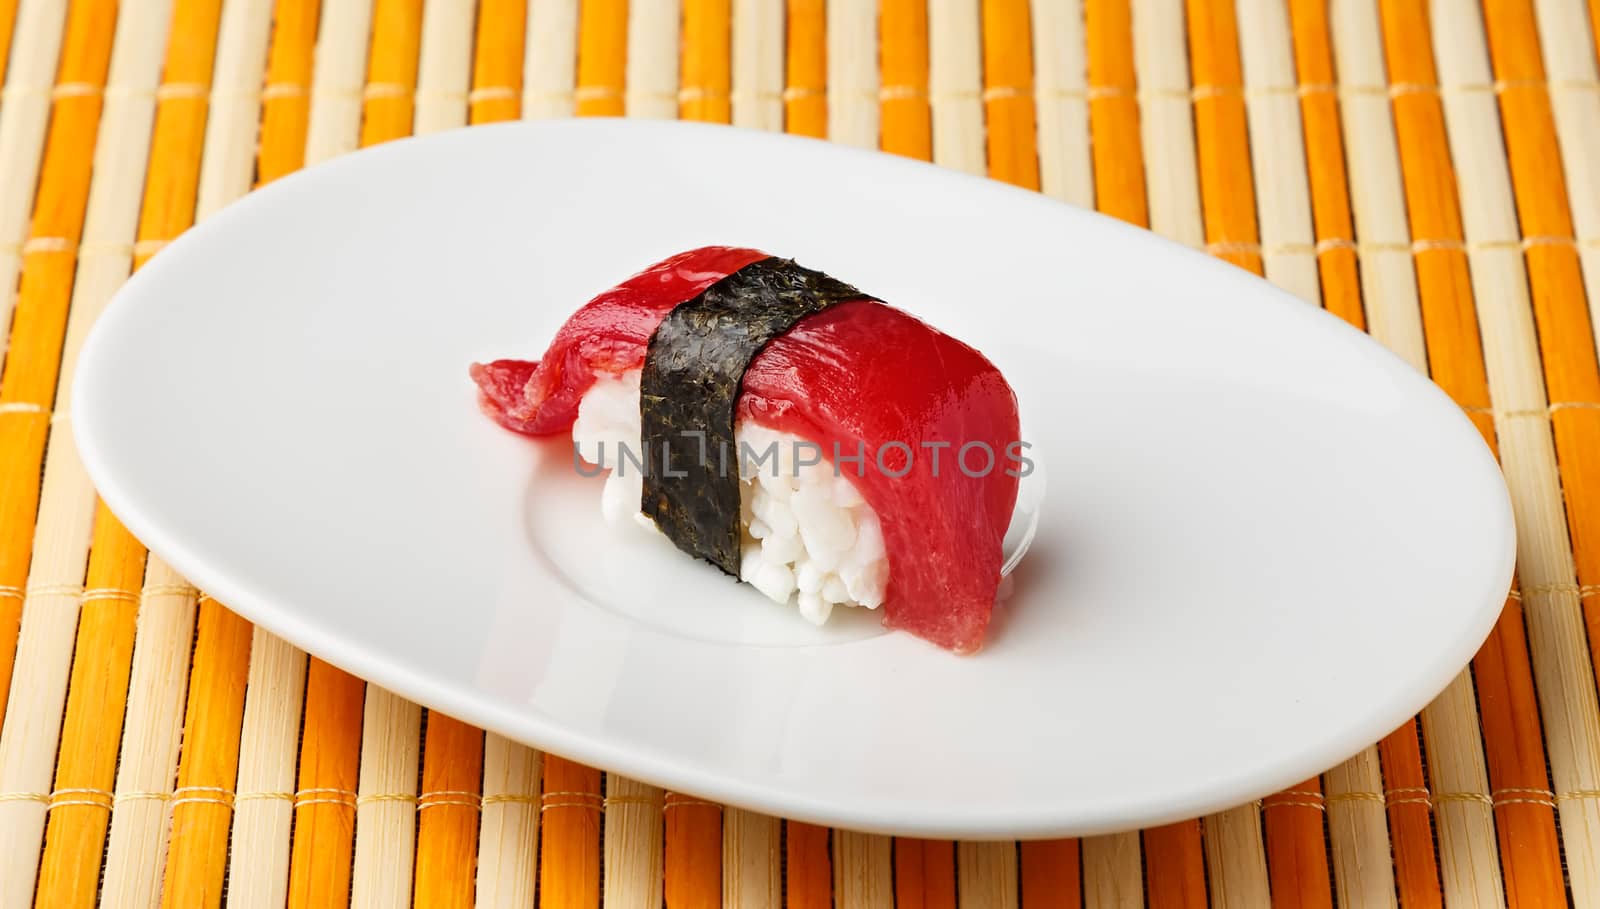  Red tuna Nigiri with Nori seaweed on white plate.Raw fish in traditional Japanese sushi style. Horizontal image.